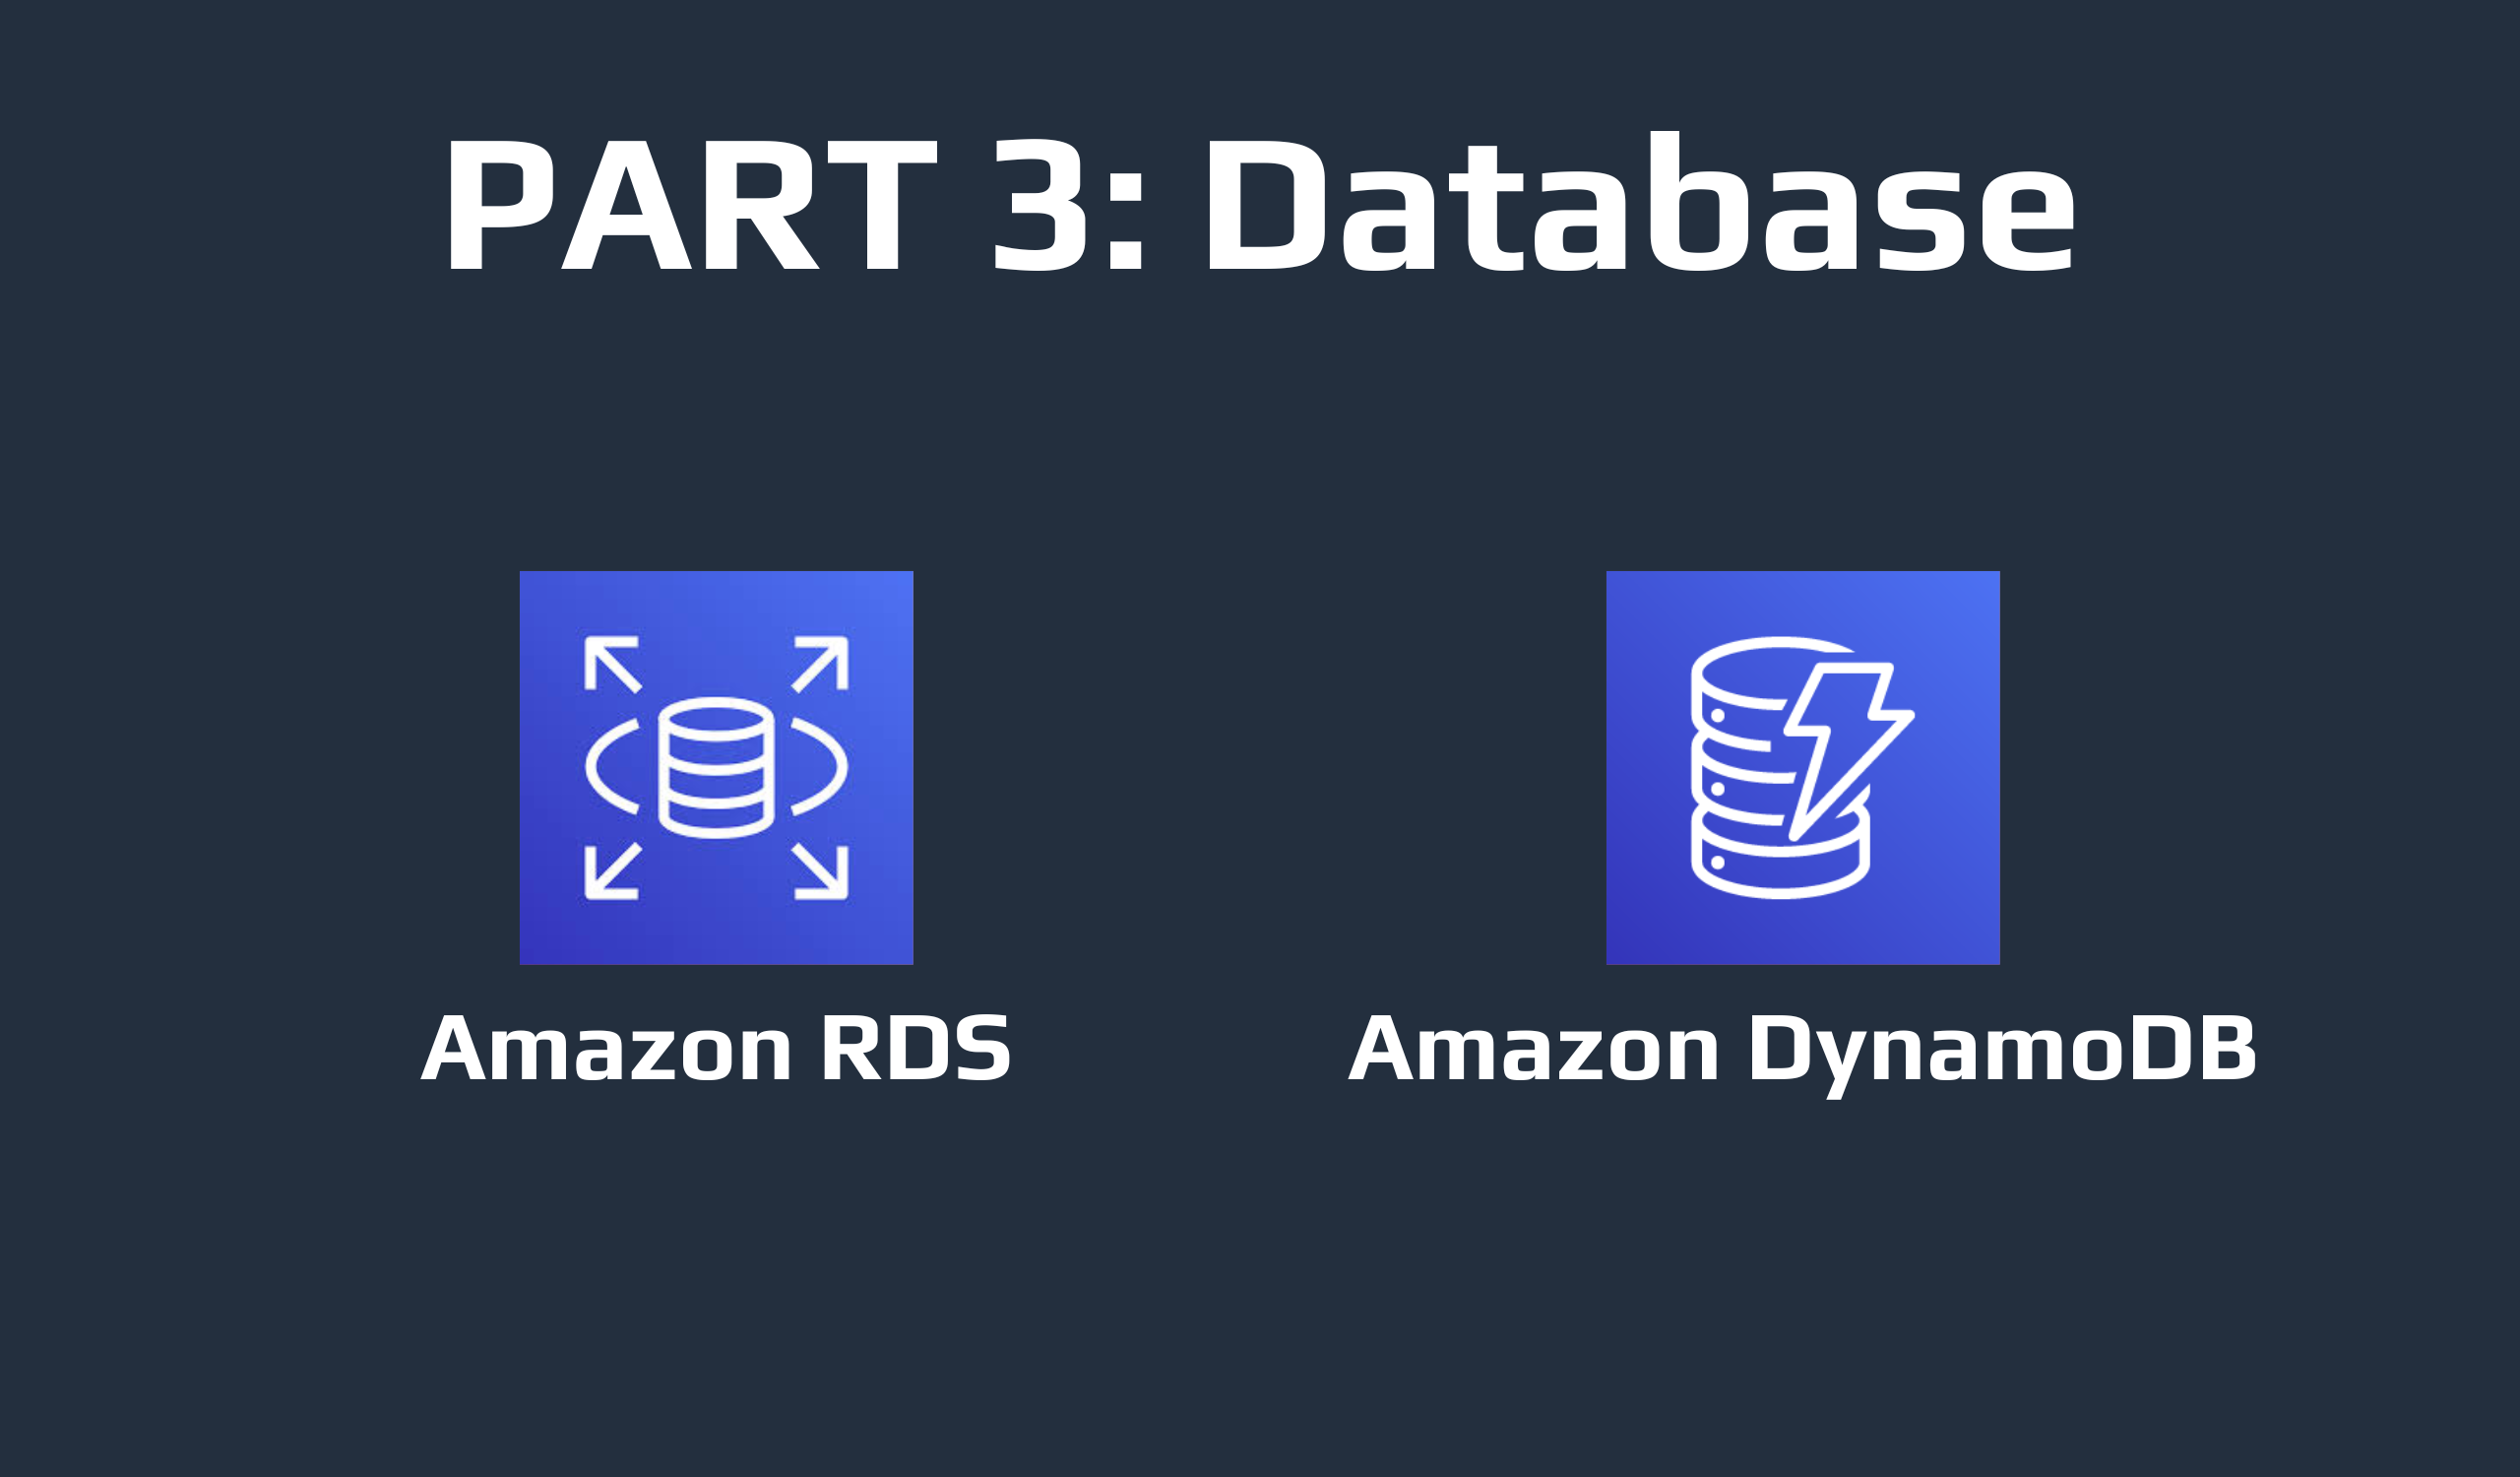 Amazon RDS and Amazon DynamoDB